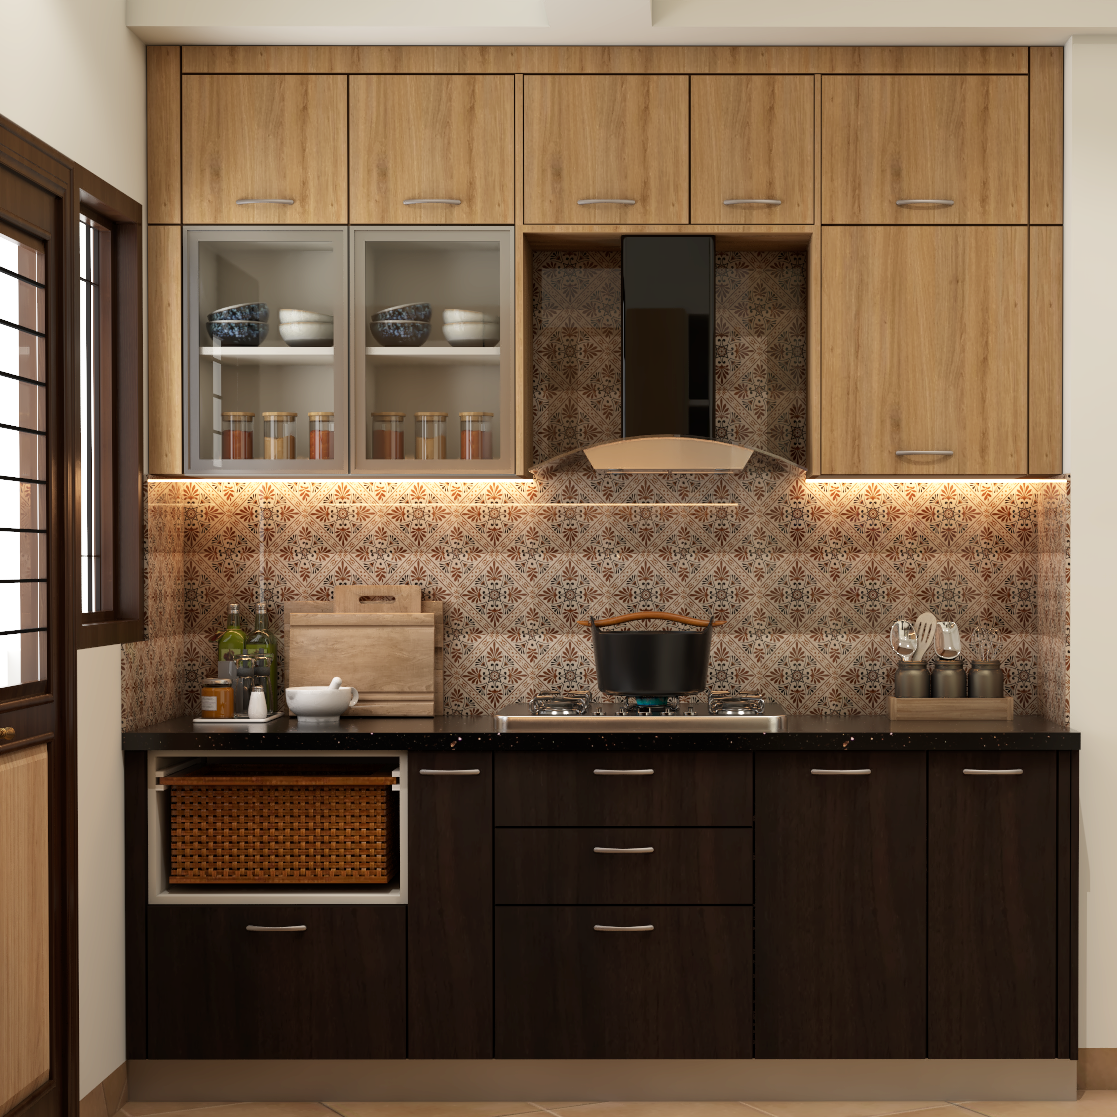 Modern Modular Kitchen Design With Large Window